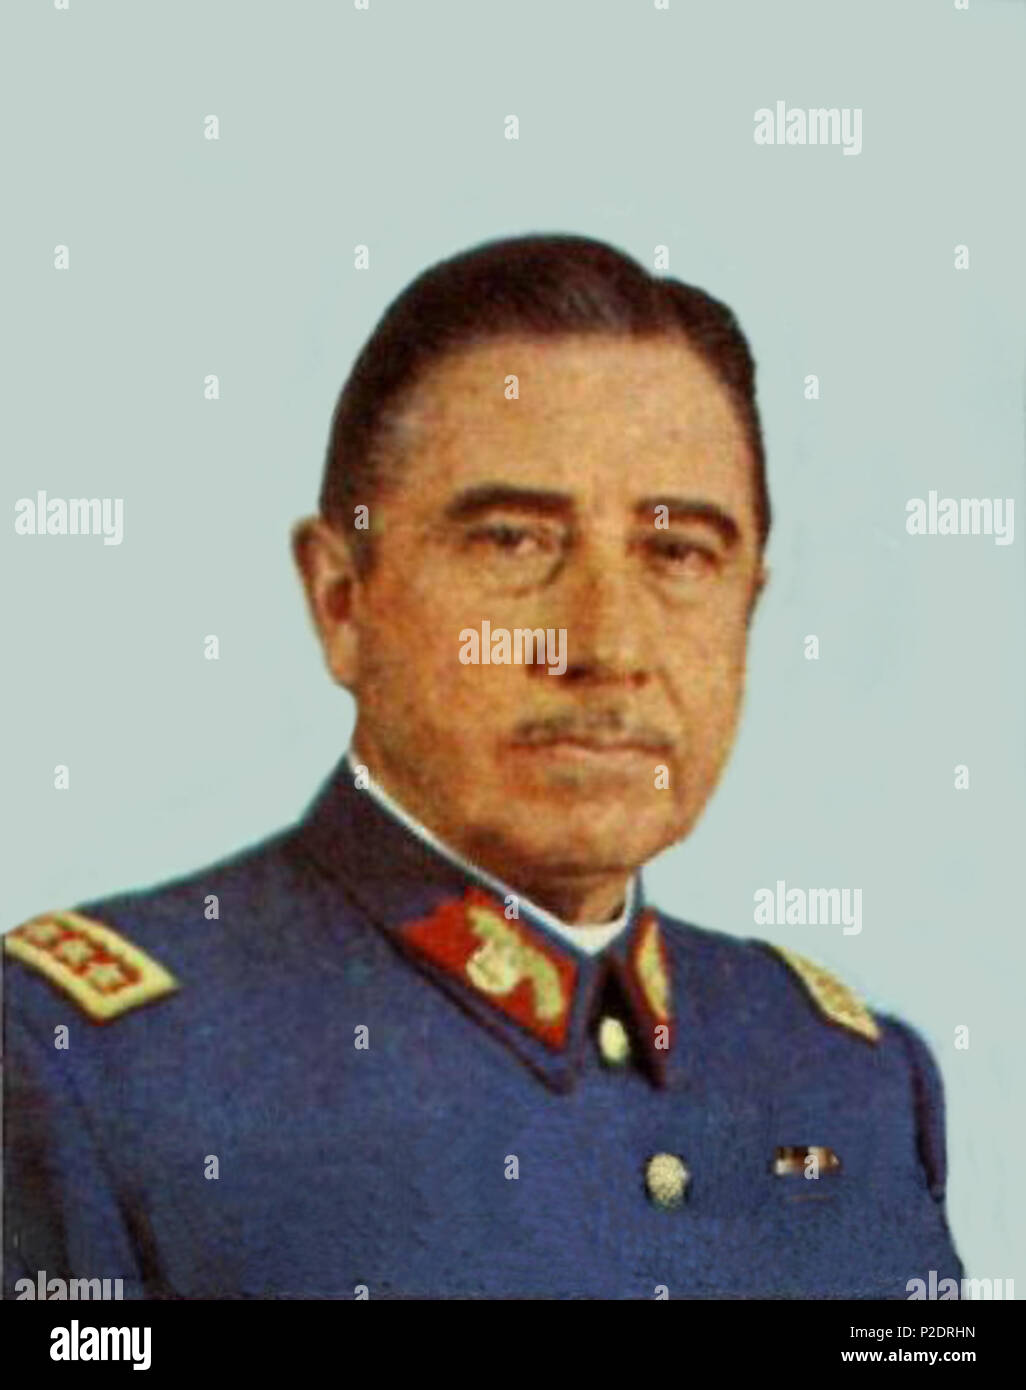 . General Augusto Pinochet Ugarte en 1974. 19 November 2009, 03:57 (UTC).  Pinochet-estampilla.jpg: NCO Leopoldo Víctor Vargas (Fuerza Aérea de Chile) *derivative work: Rec79 (talk) 2 A. Pinochet Stamp Stock Photo